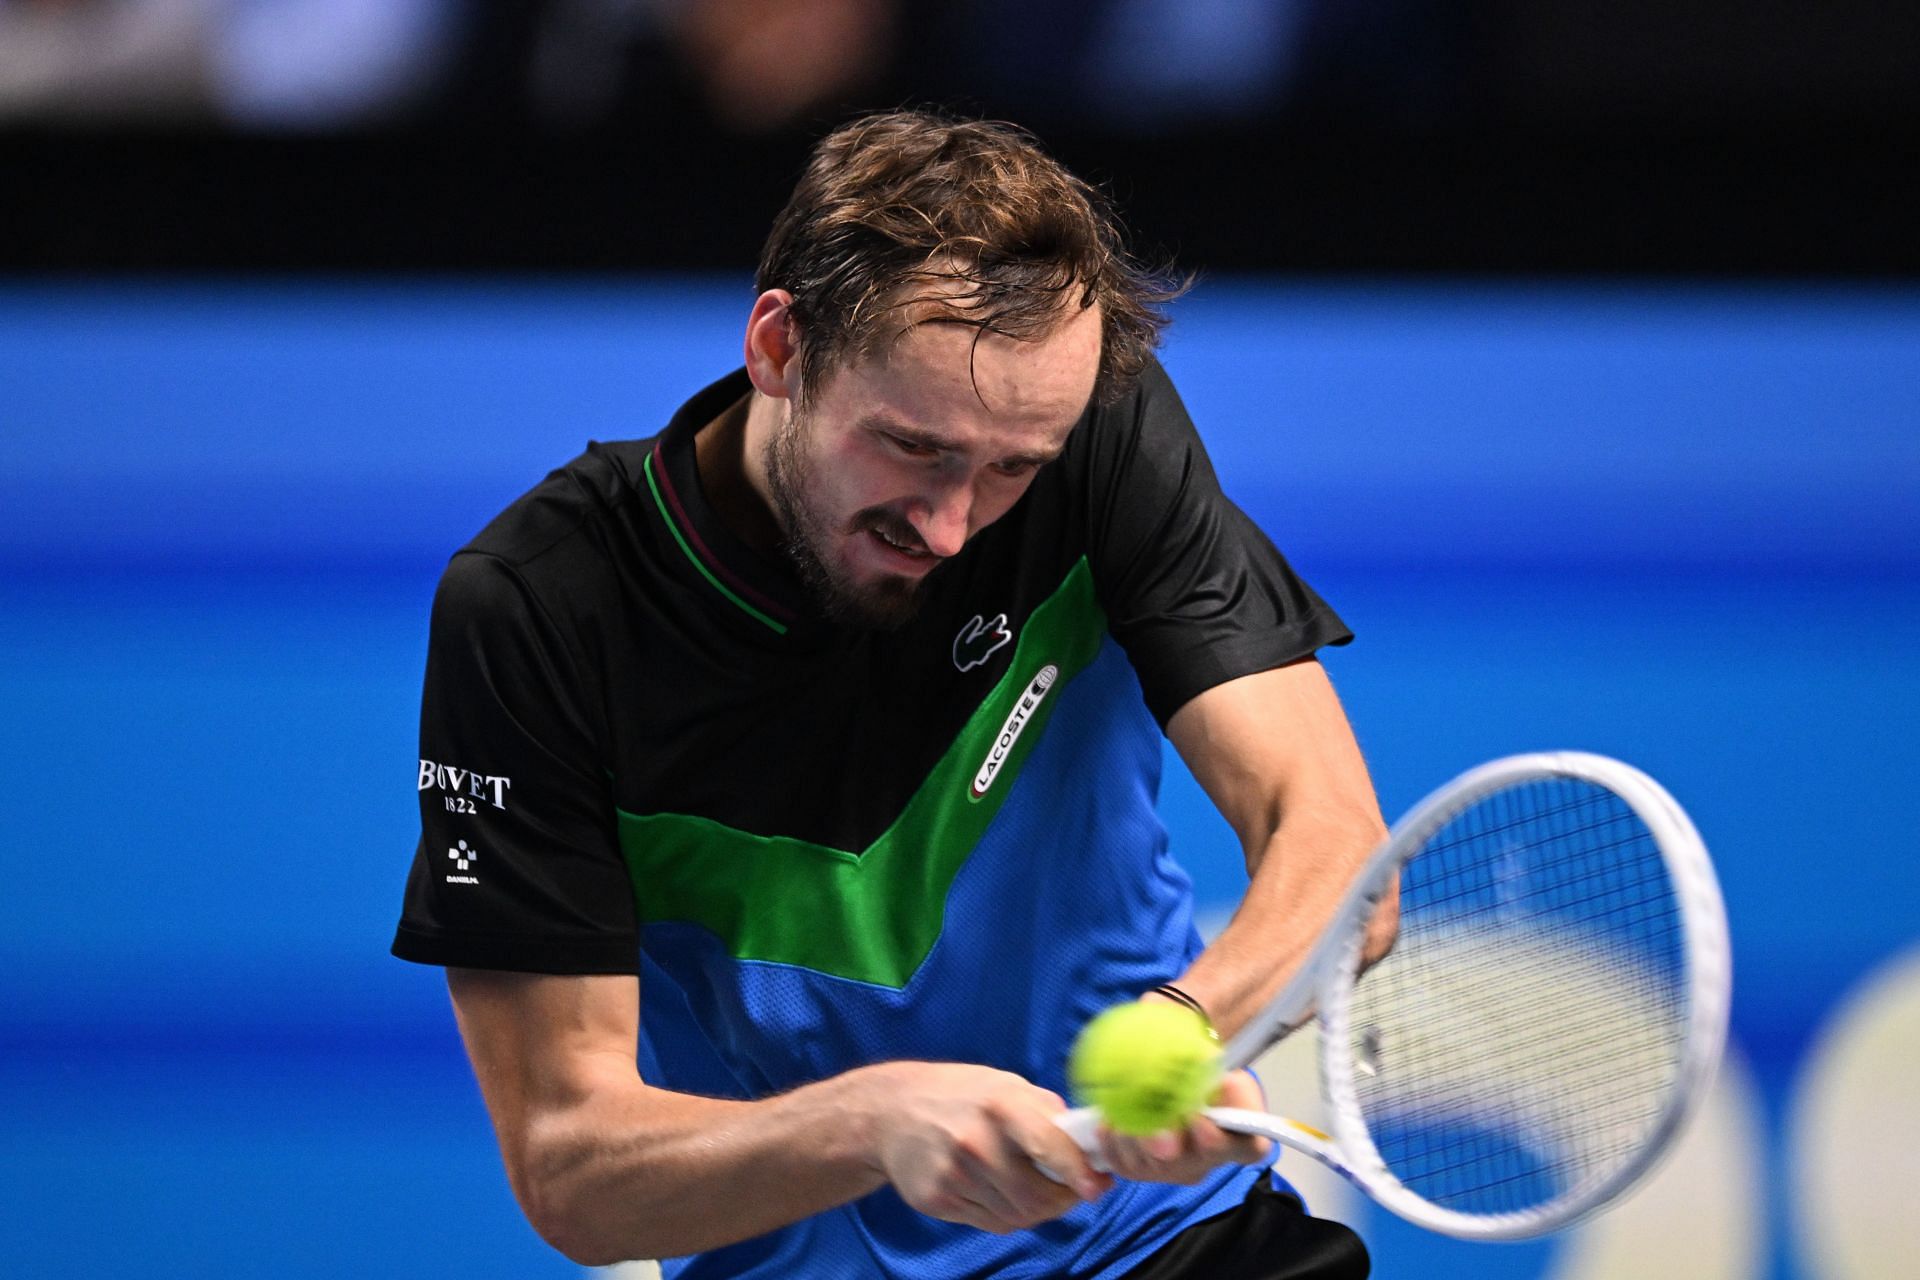 Vienna Open 2022: Daniil Medvedev vs. Grigor Dimitrov Tennis Pick